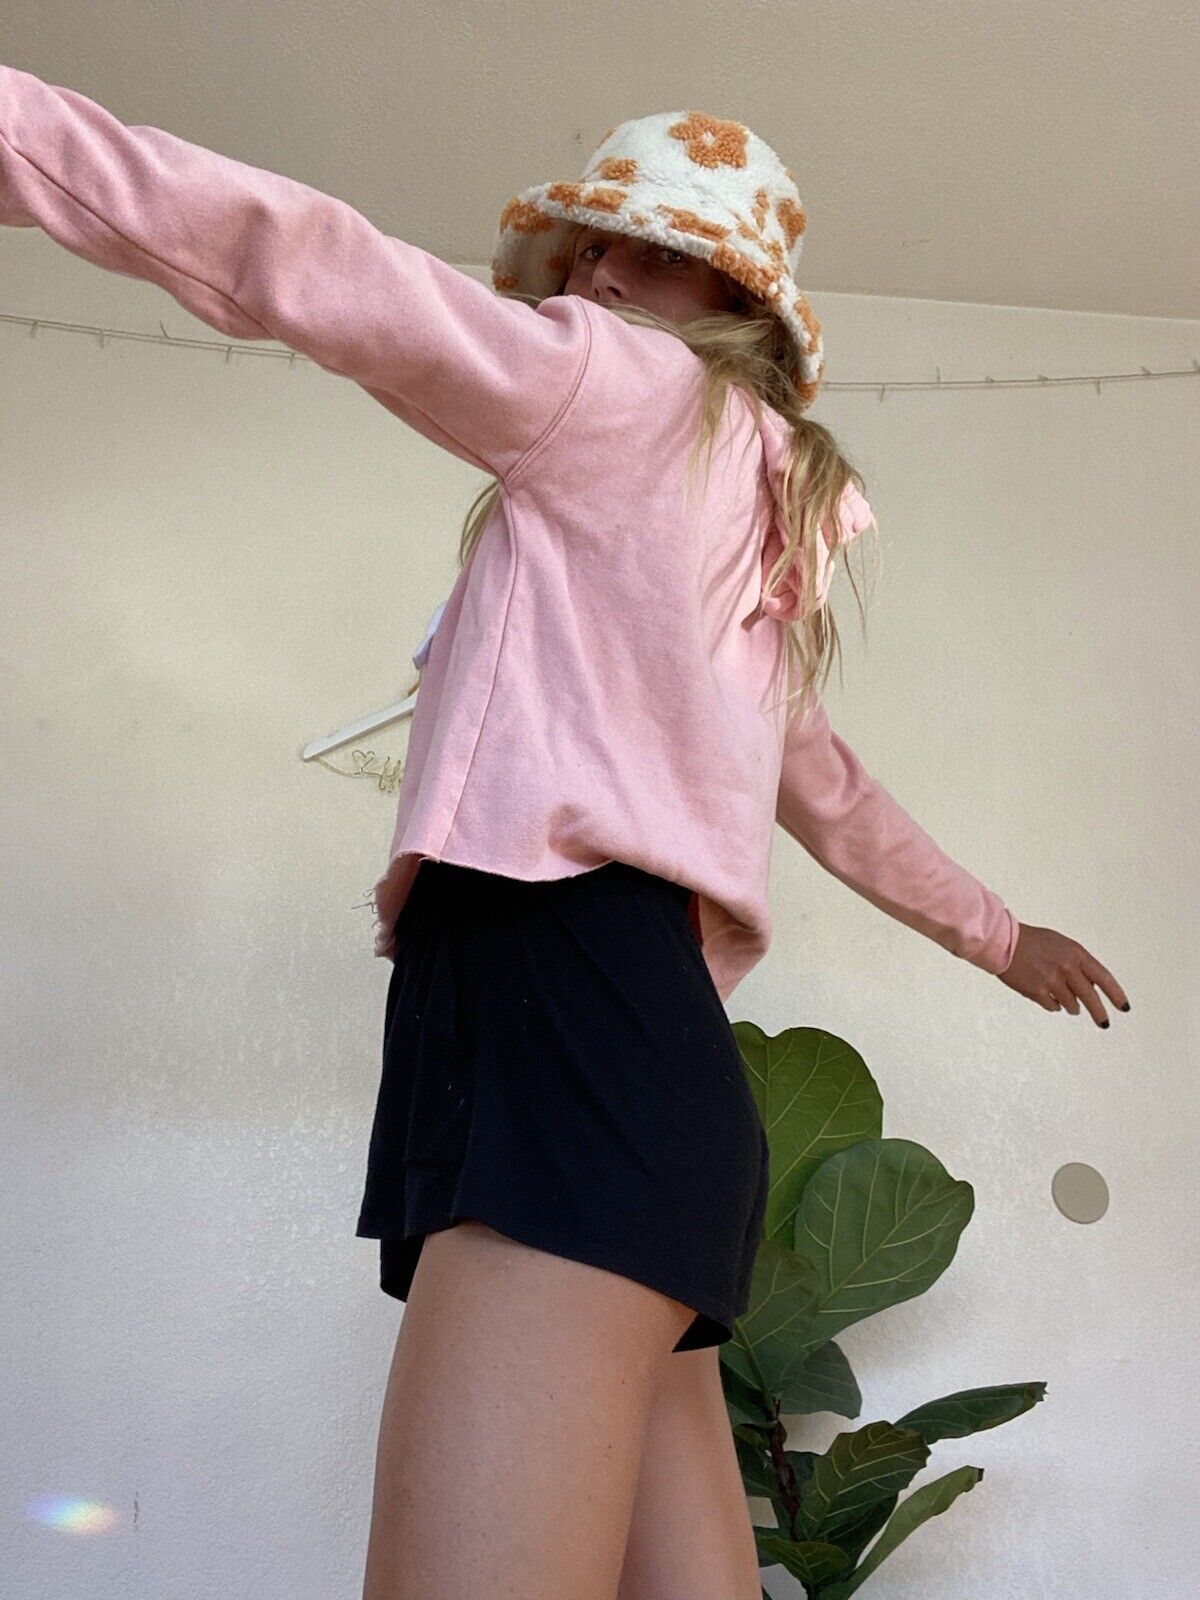 Pink Crop Top Hoodie Sweatshirt - Destined - Women’s Medium